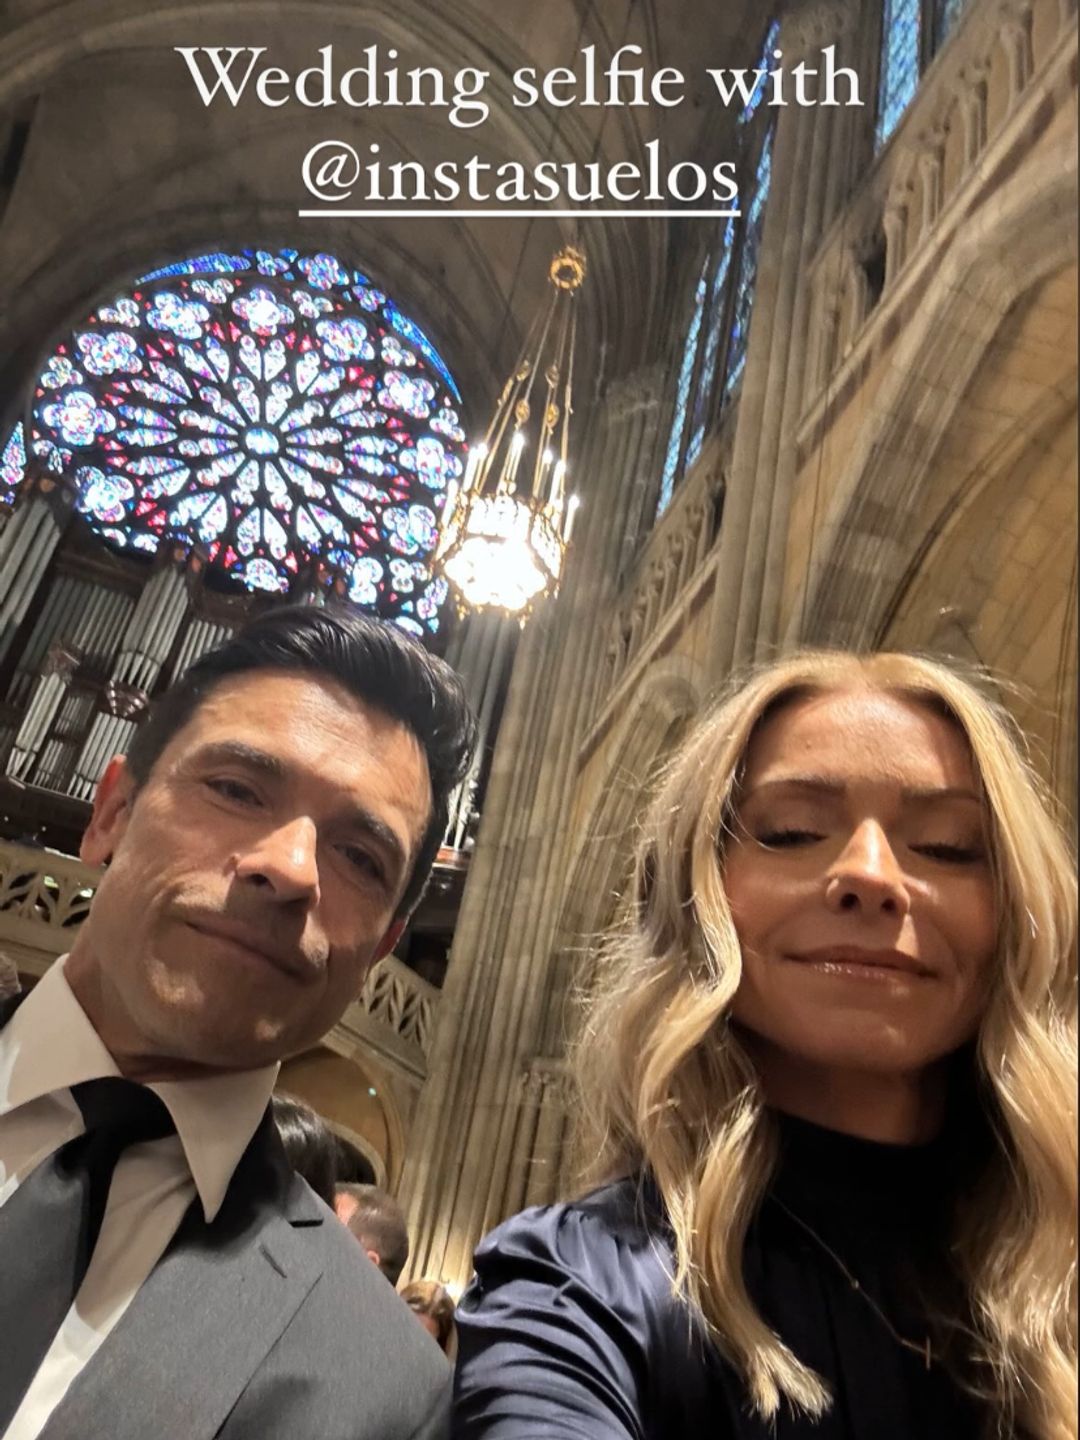 Kelly Ripa and Mark Consuelos taking a selfie inside a church